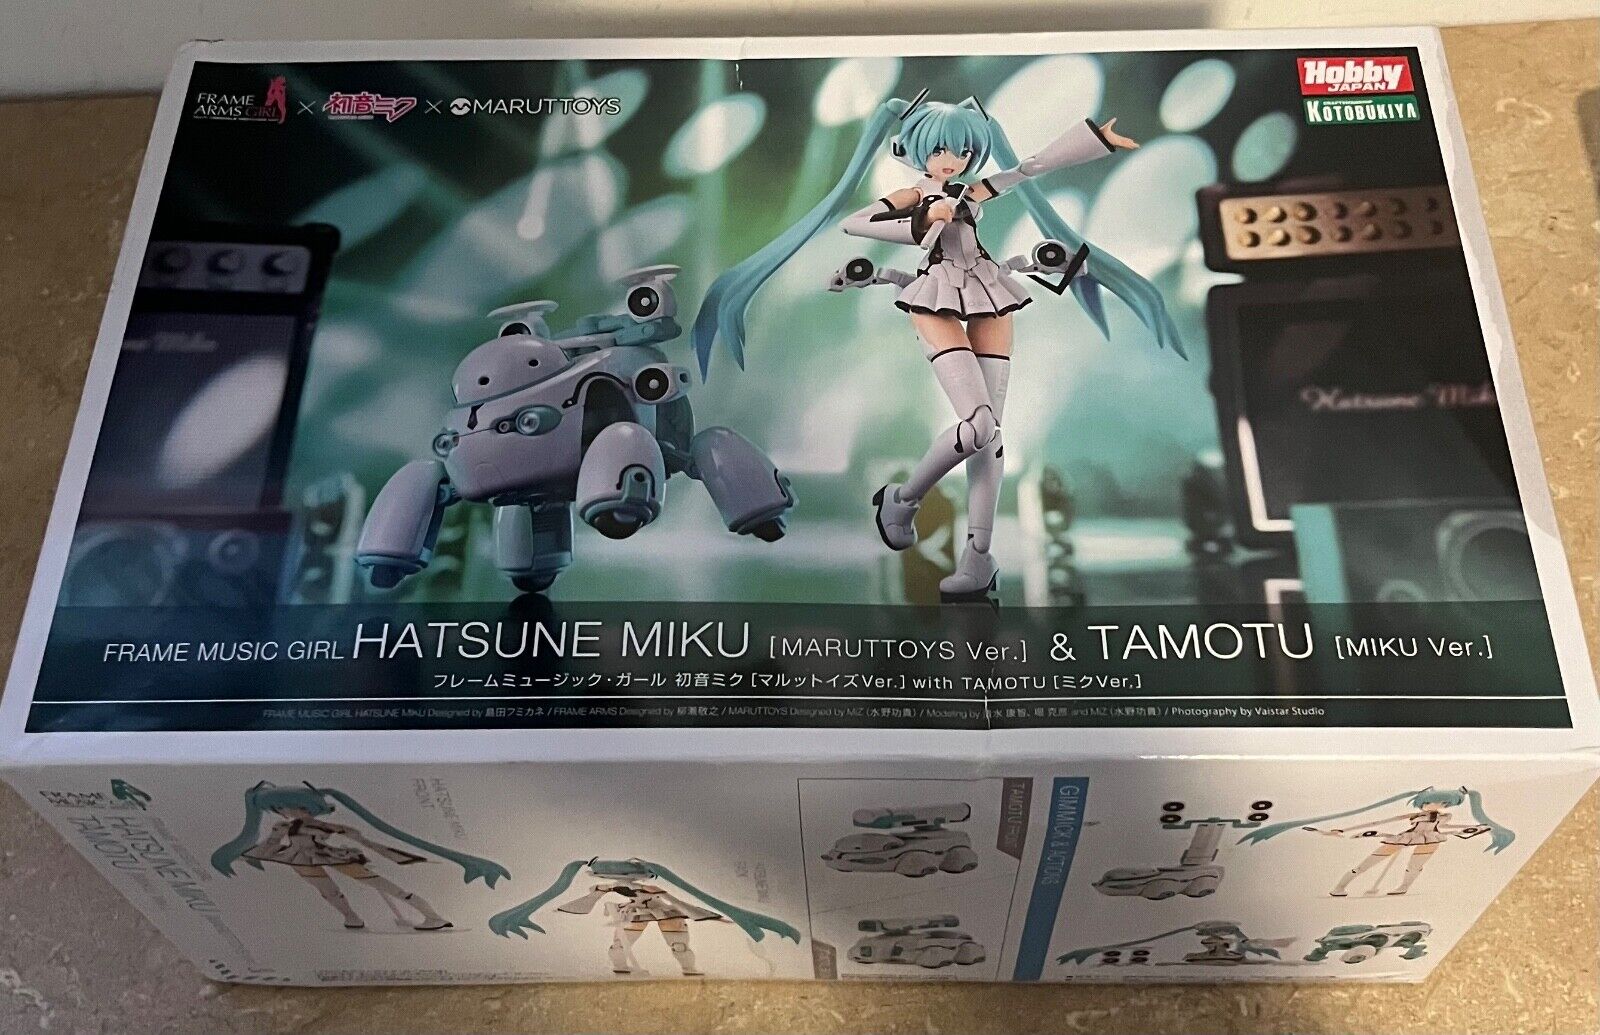 Frame Music Girl Hatsune Miku [MARUTTOYS Ver.] & TAMOTU [Miku Ver.] USA Seller